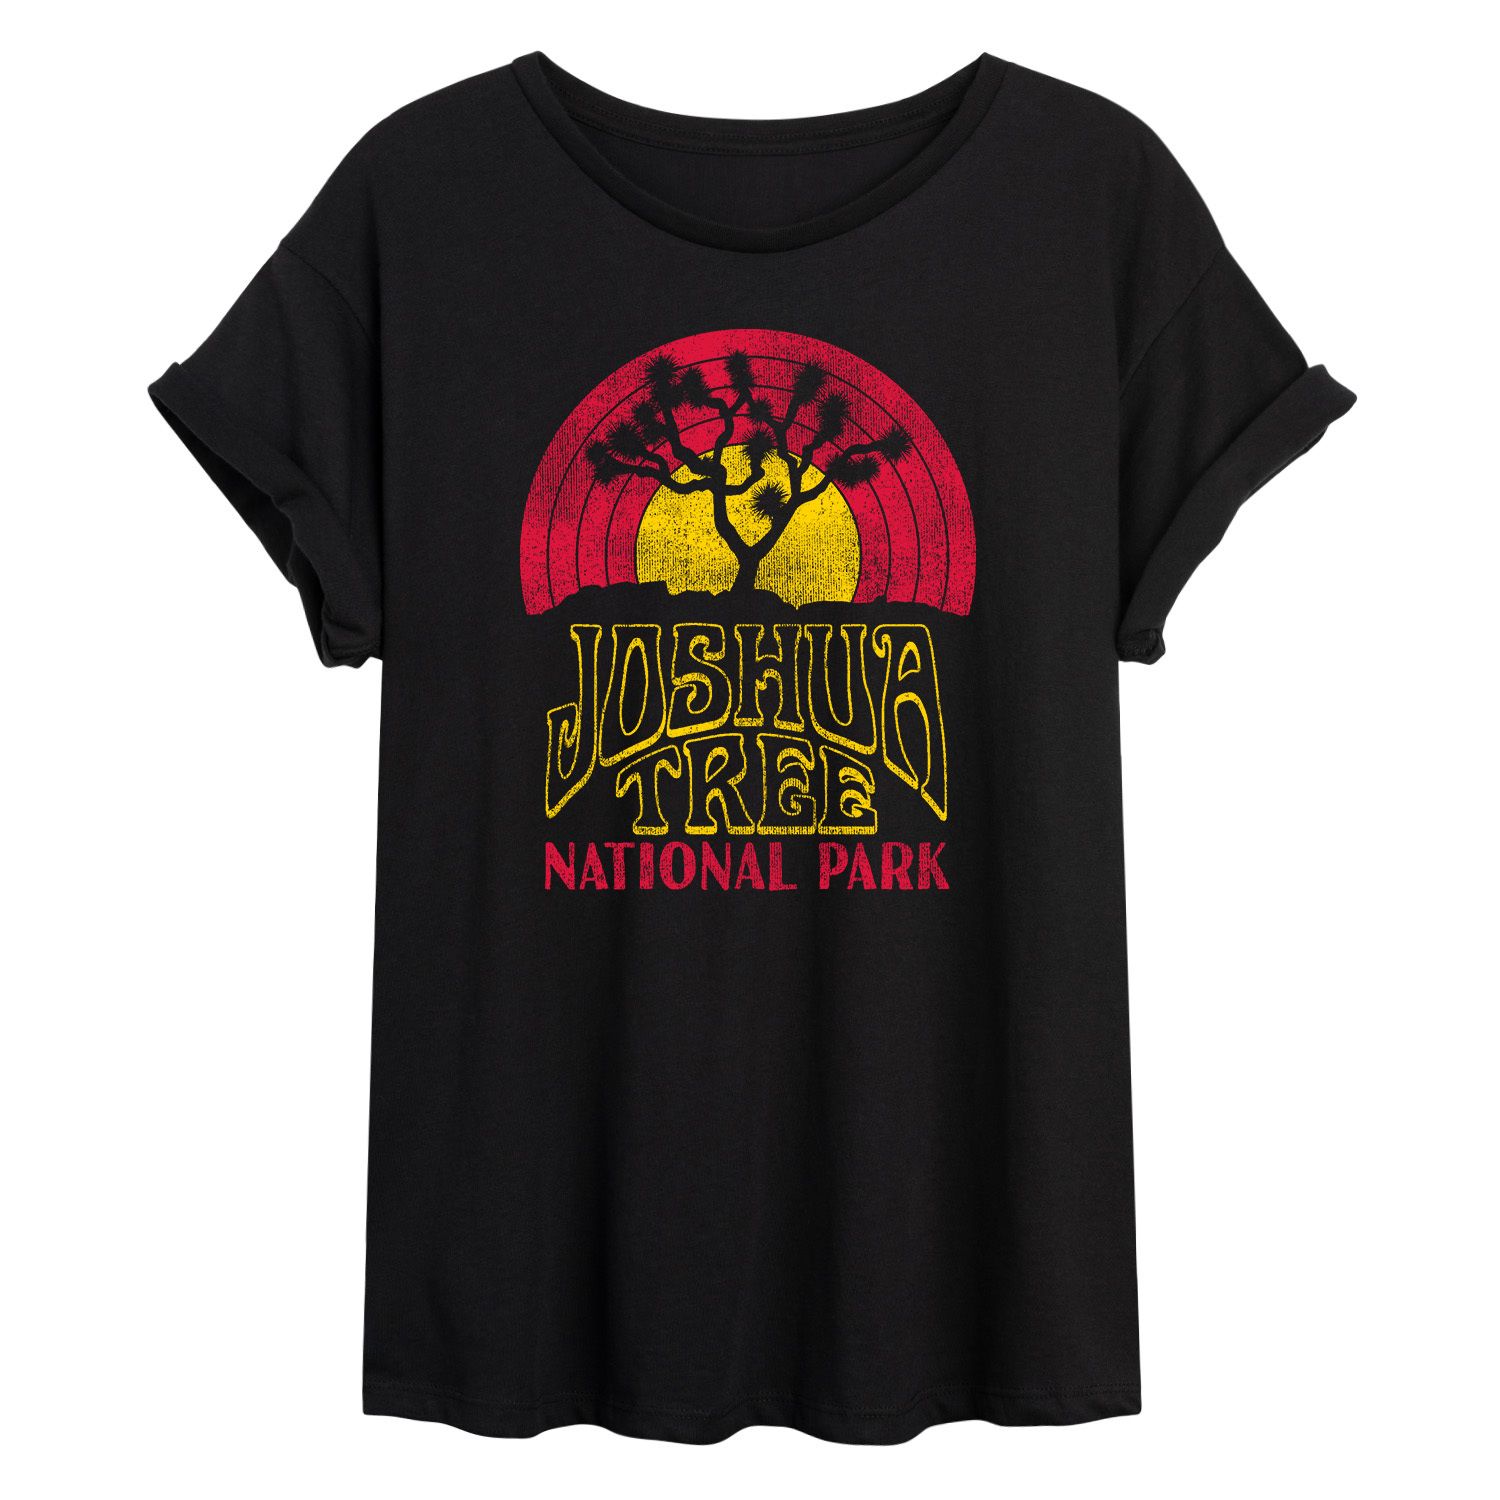 Размерная футболка с рисунком Joshua Tree Park для юниоров Licensed Character